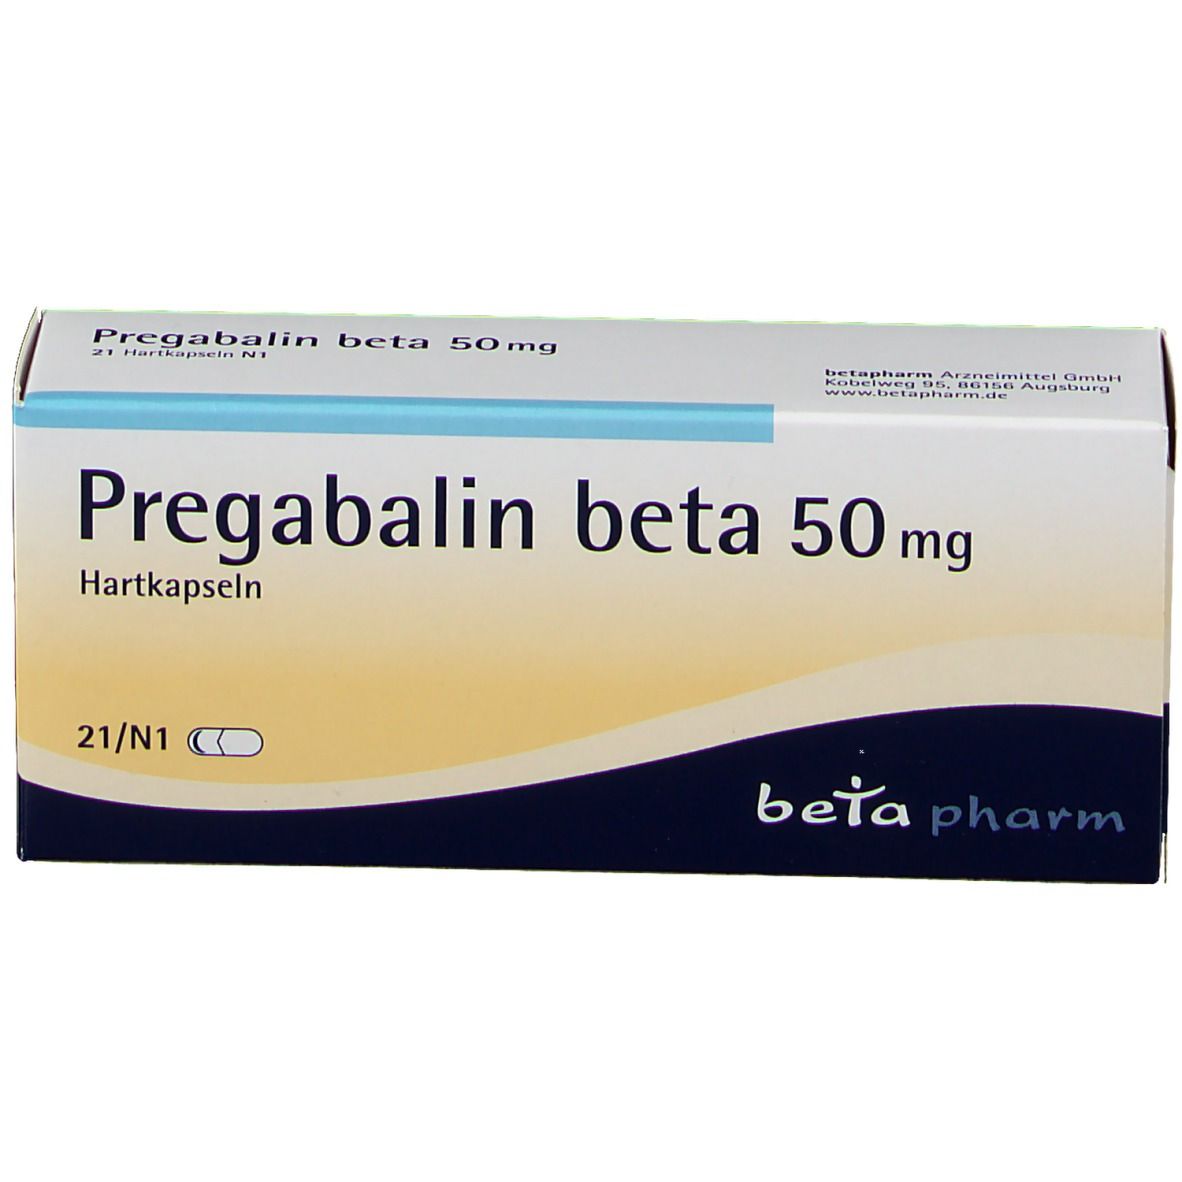 Pregabalin beta 50 mg